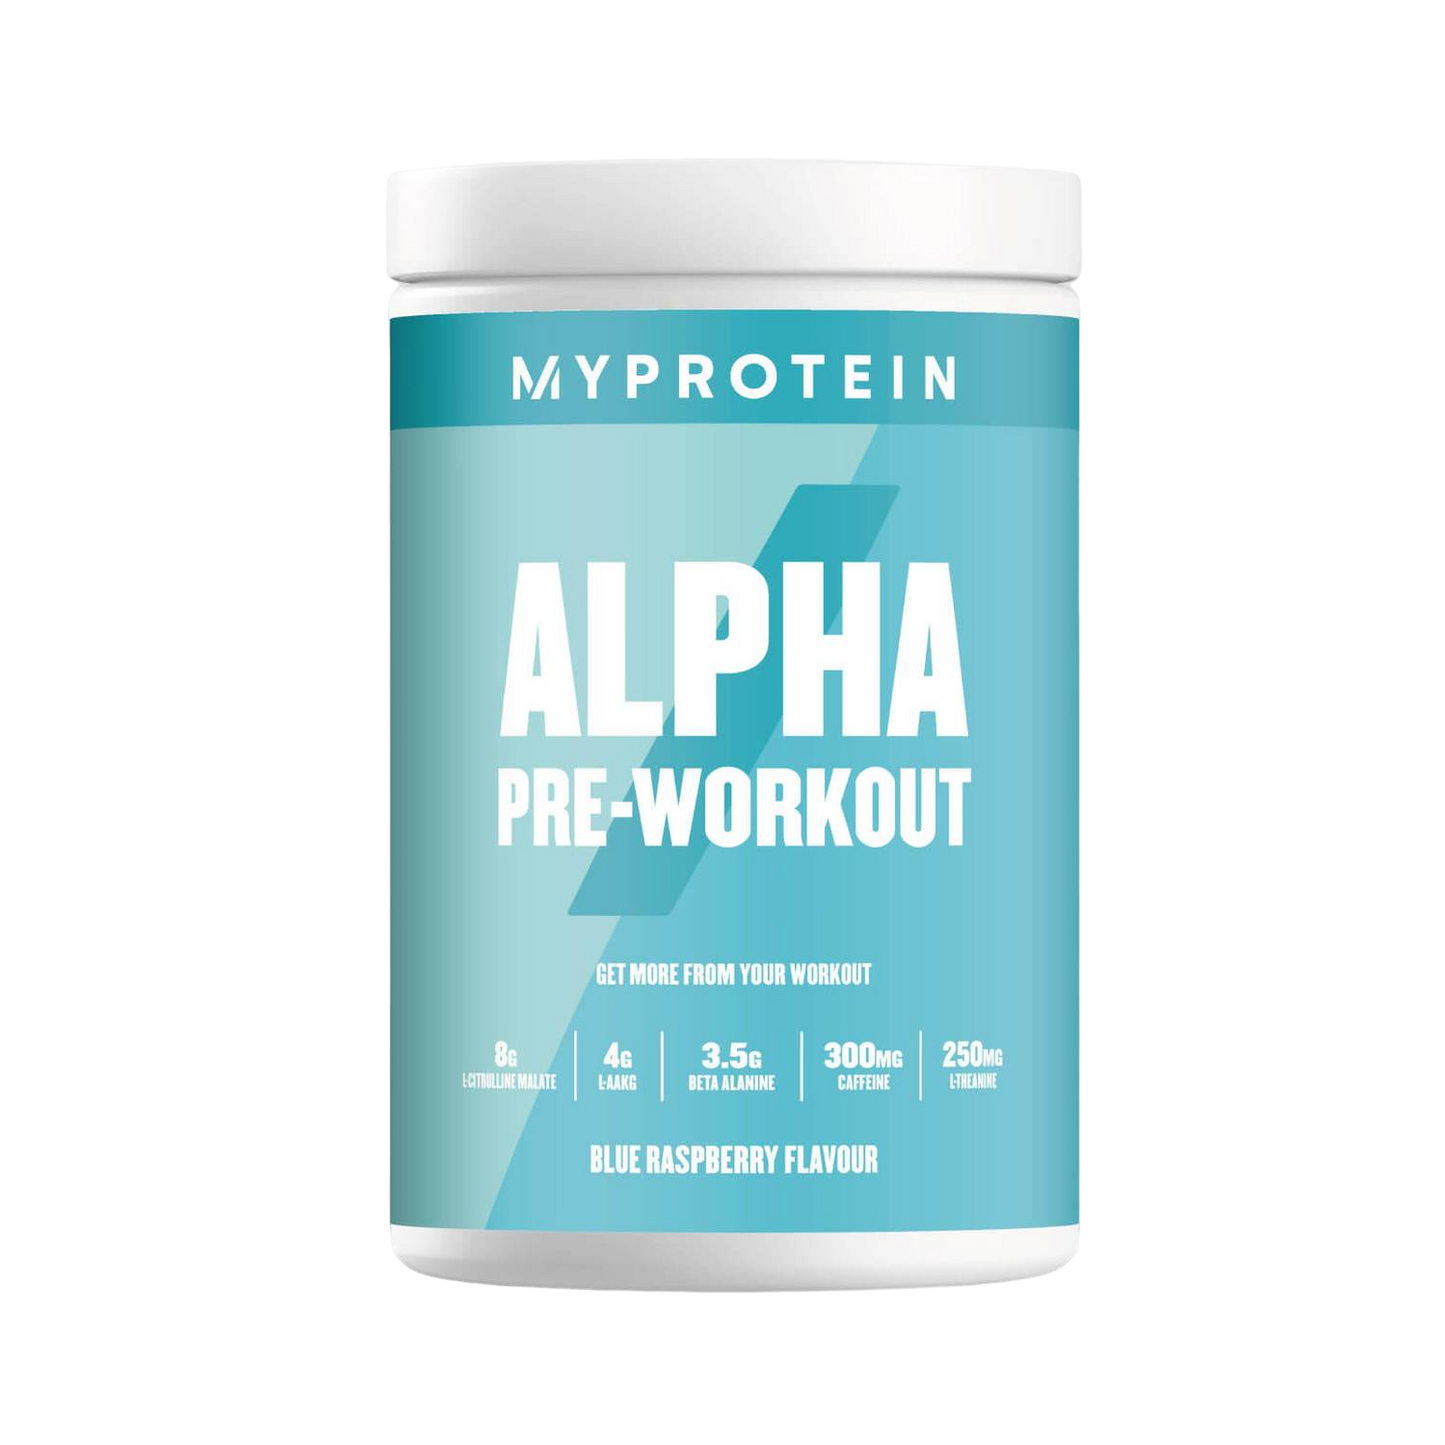 The Alpha Pre-Workout is my secret weapon. The no-nonsense formula